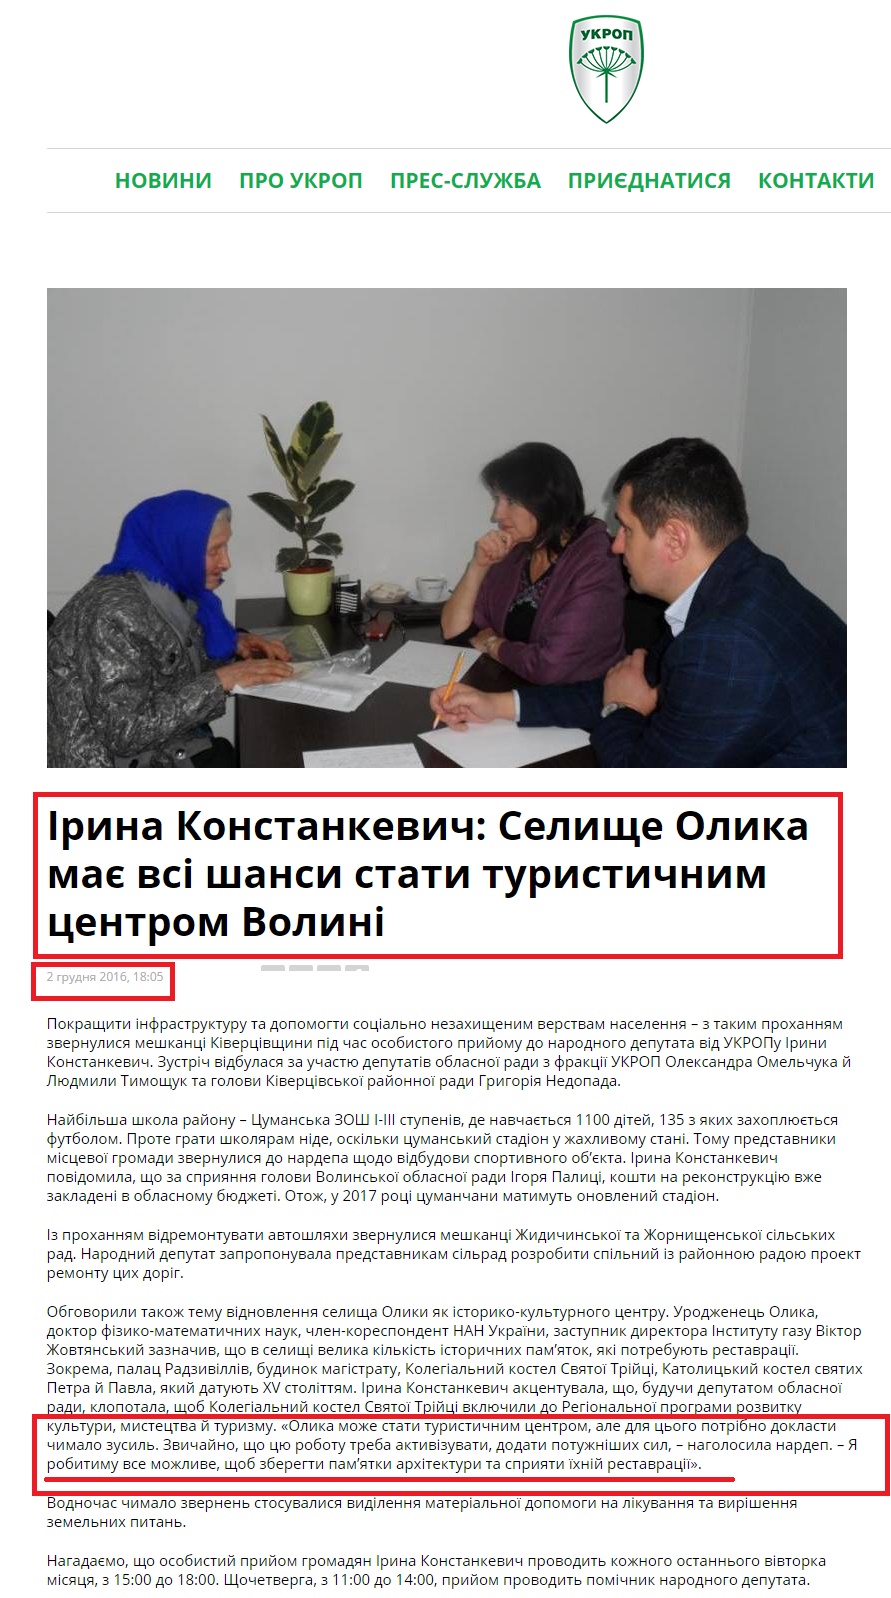 http://www.ukrop.com.ua/uk/news/regional/4213-irina-konstankevich-selische-olika-maye-vsi-shansi-stati-turistichnim-tsentrom-volini